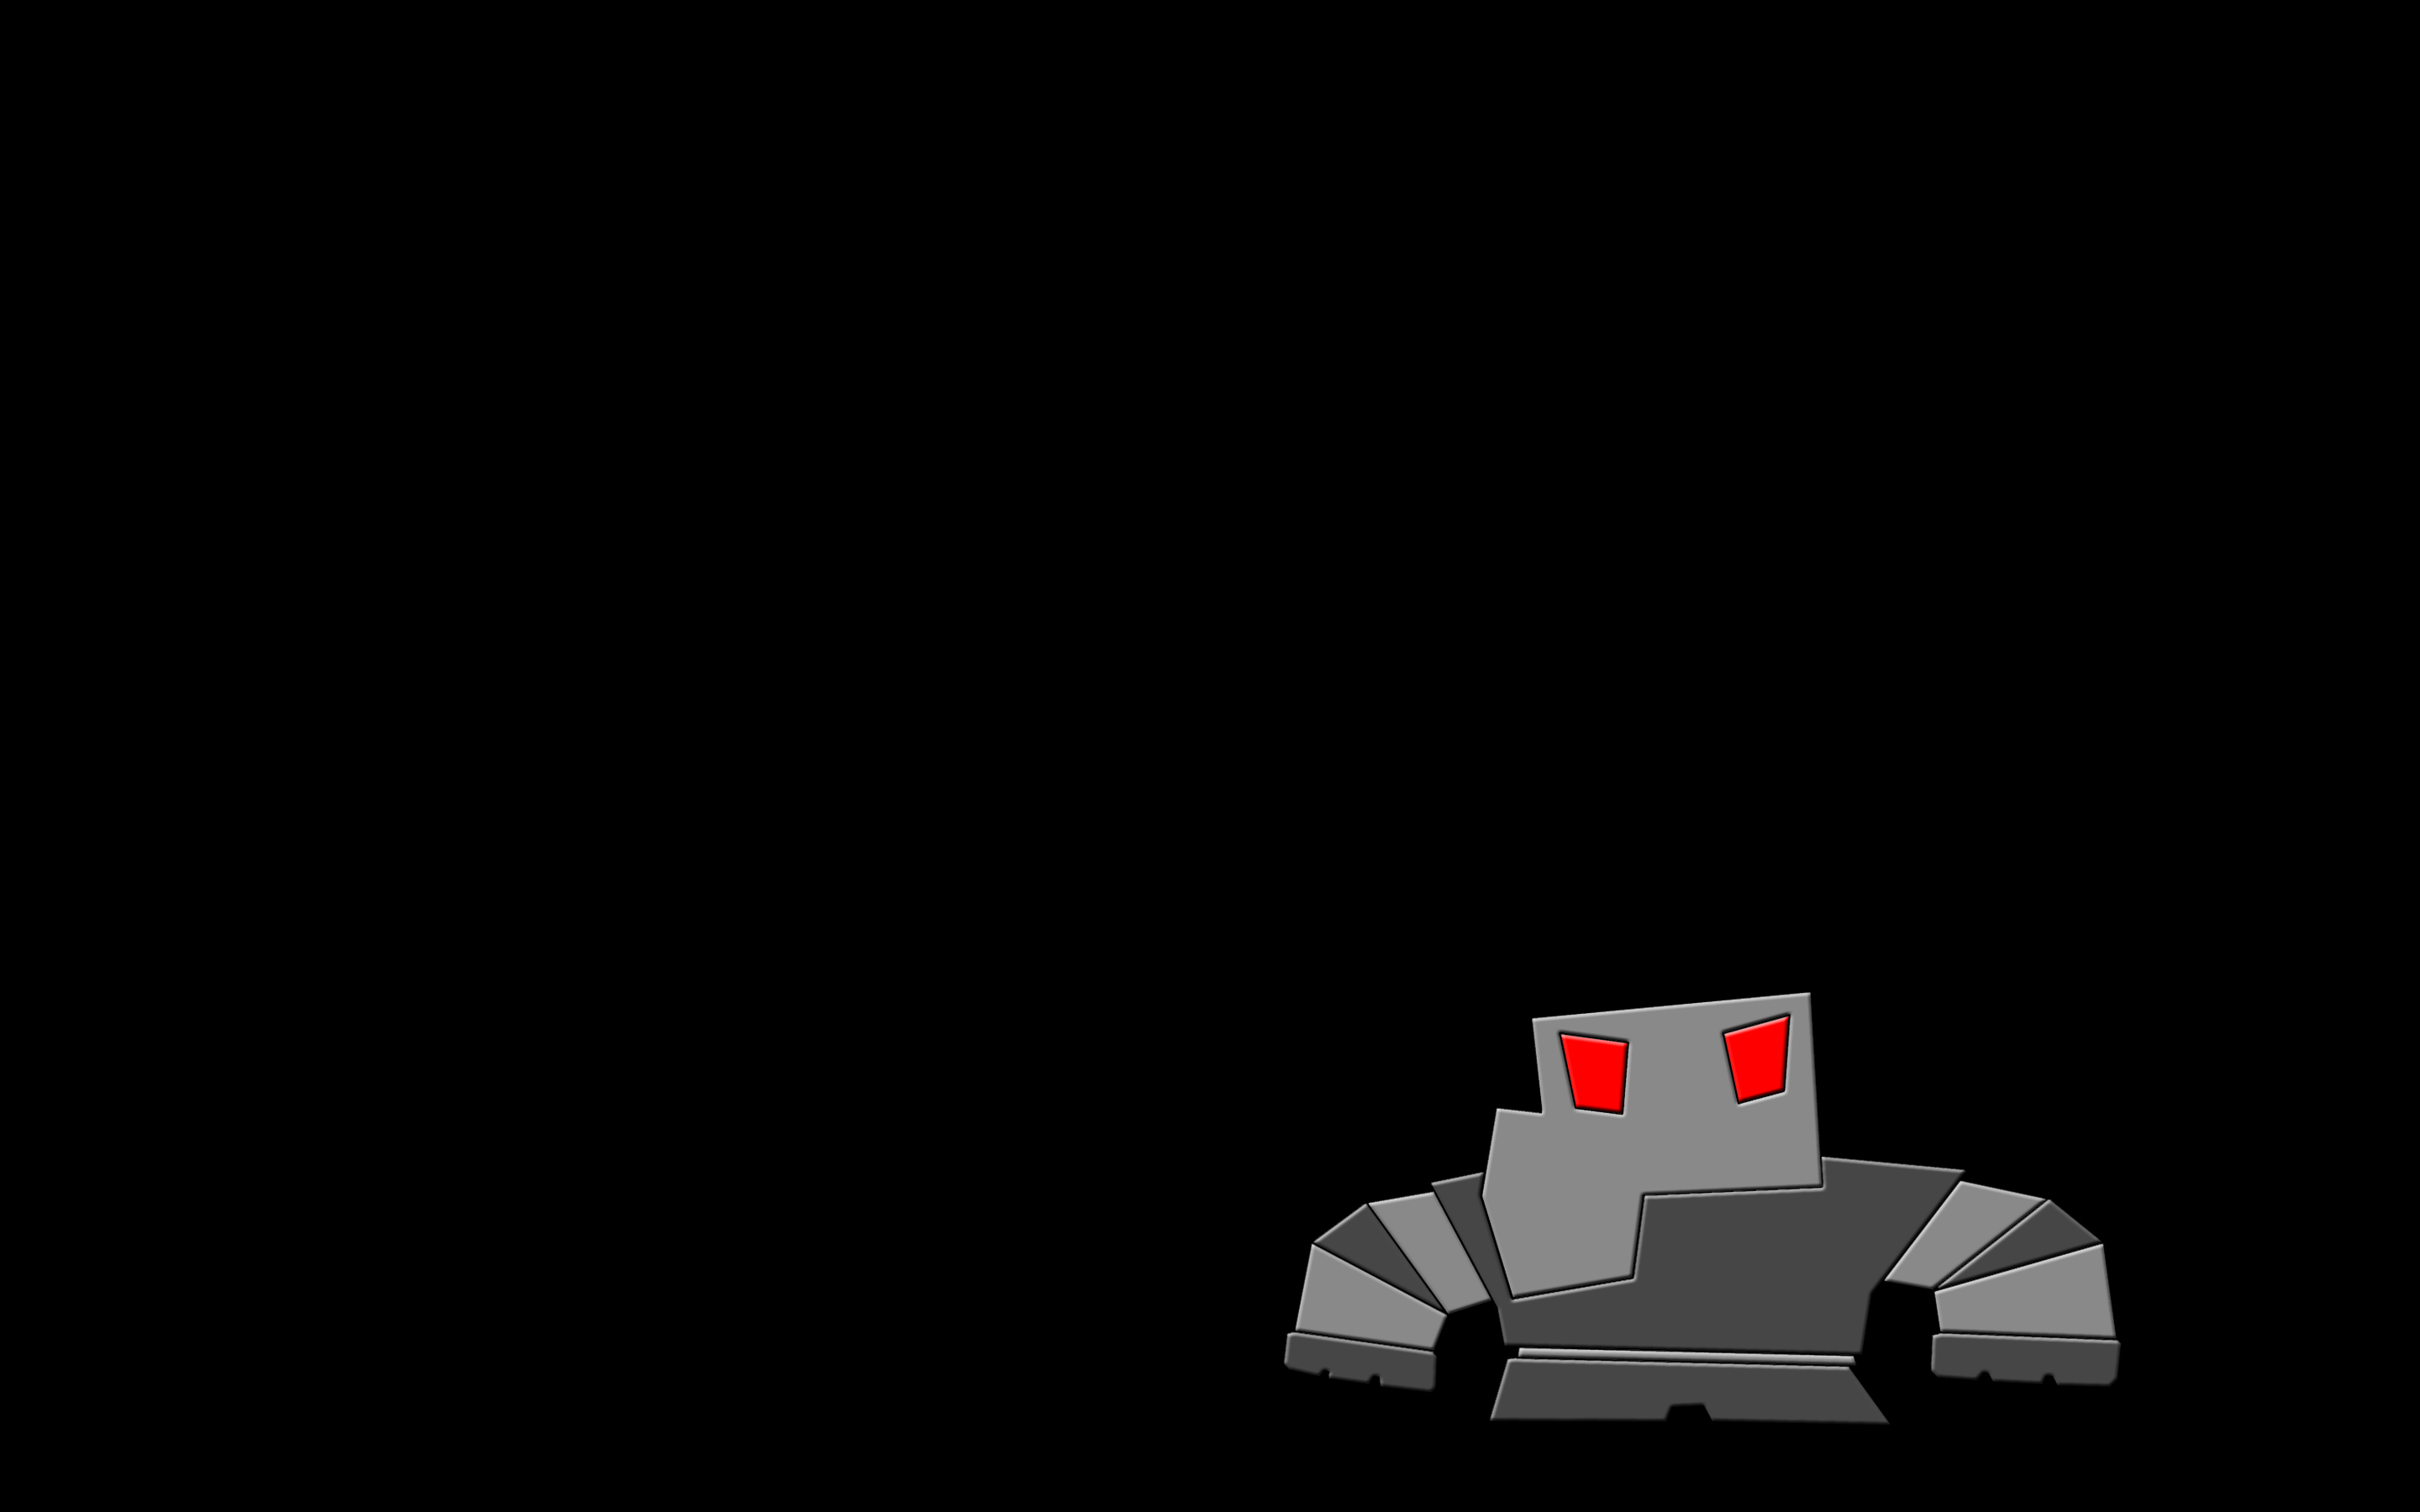 General 2880x1800 robot red eyes minimalism simple background black background